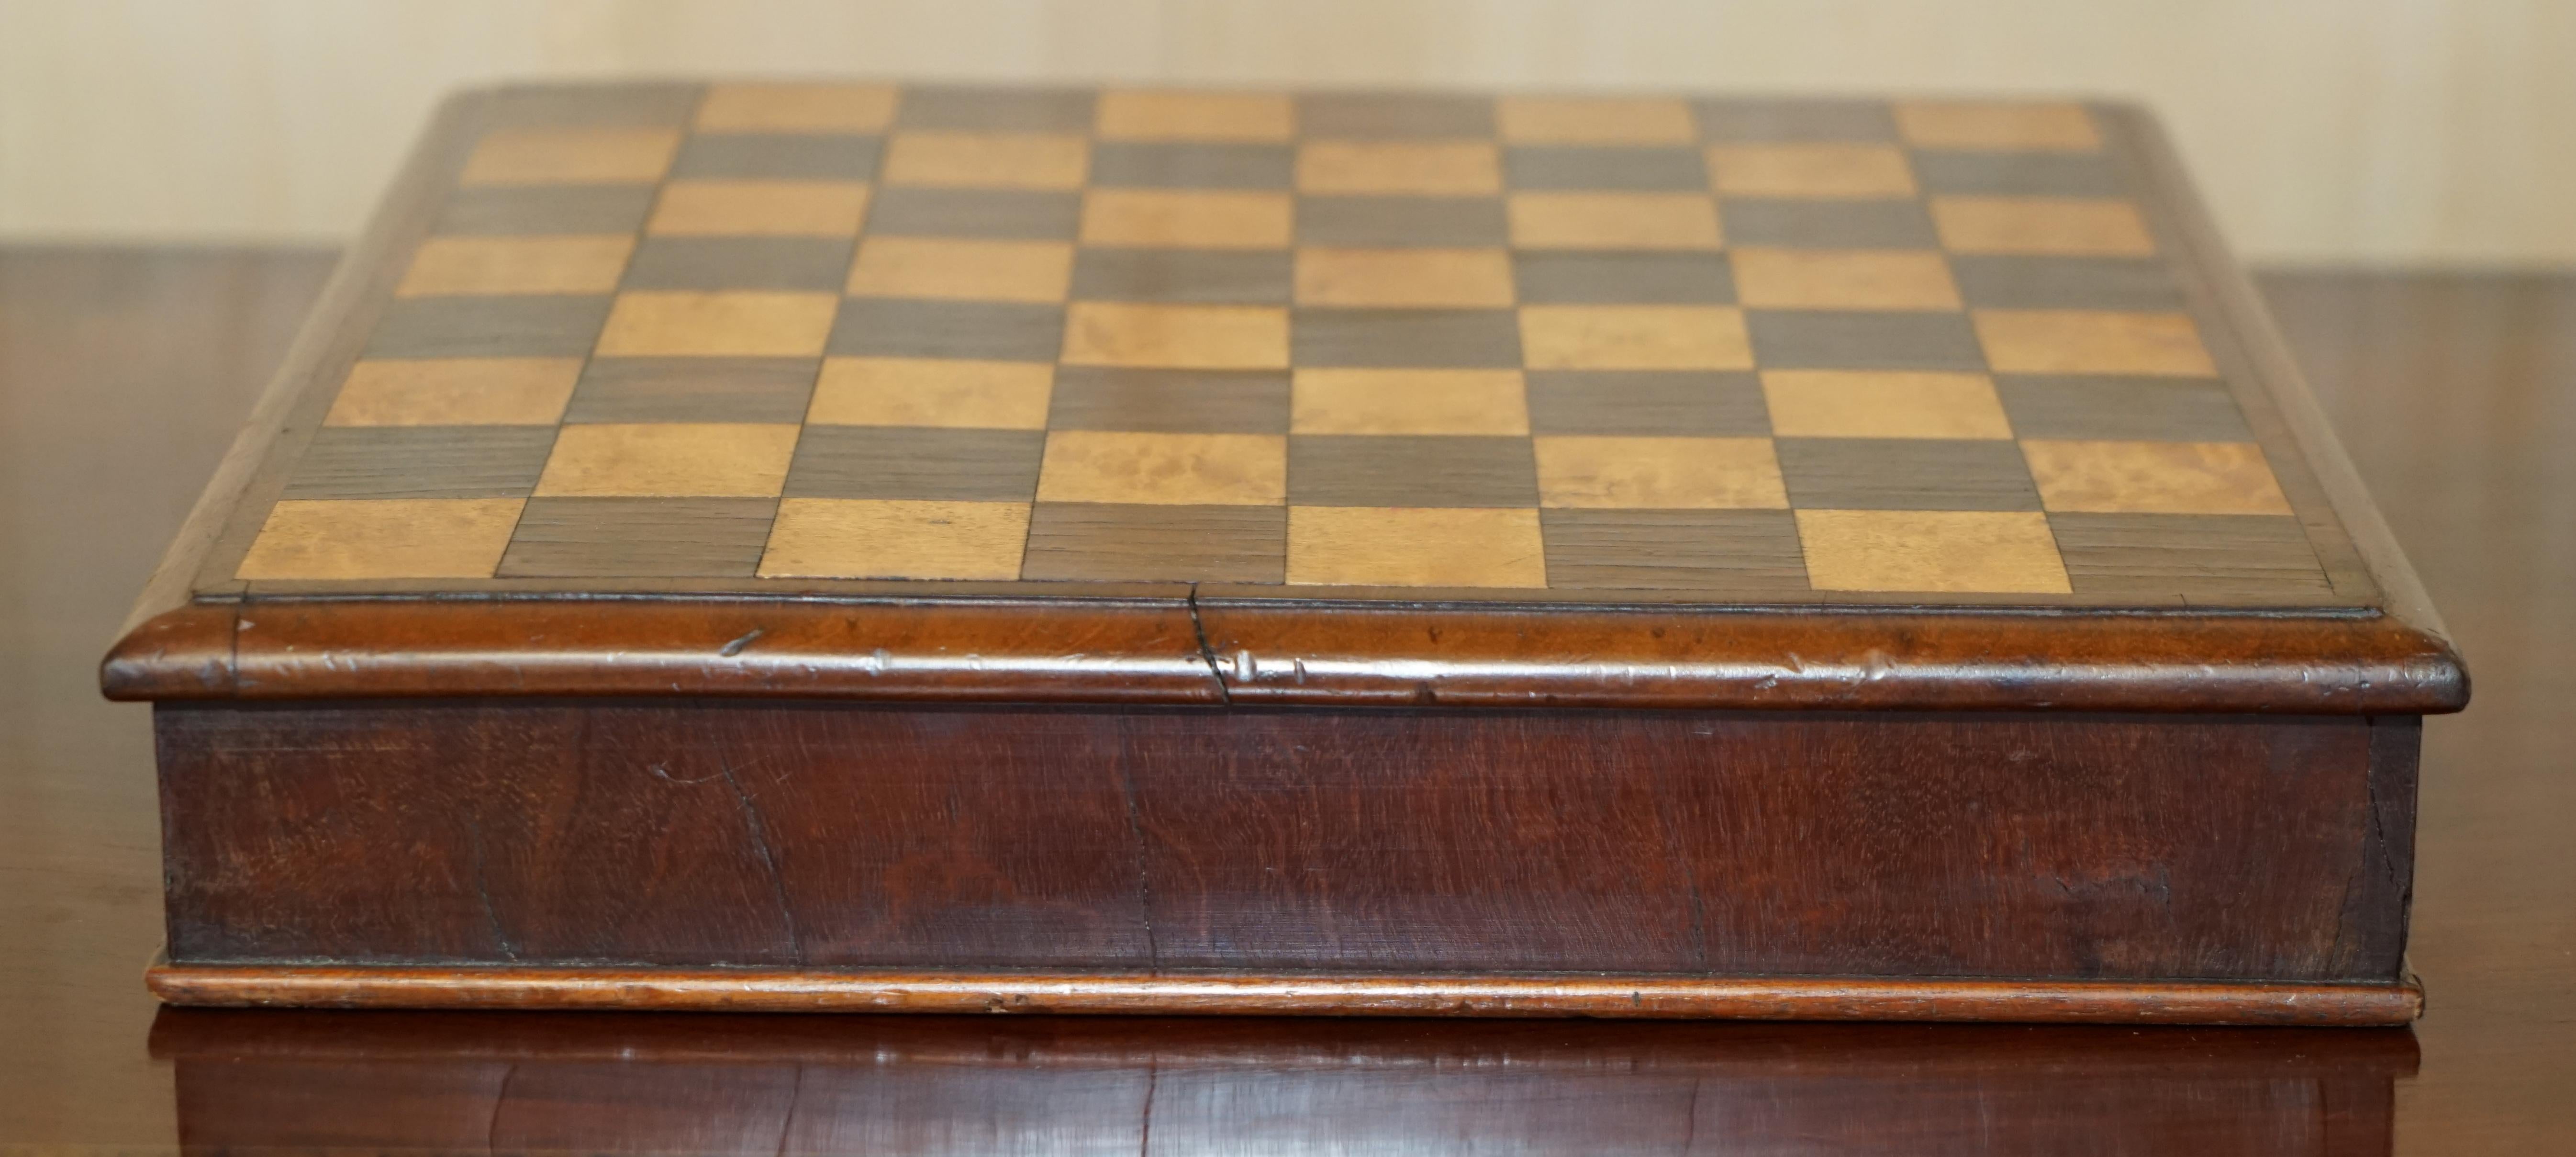 Hardwood Jaques London Victorian Burr Walnut Chessboard Staunton Chess Backgammon Pieces